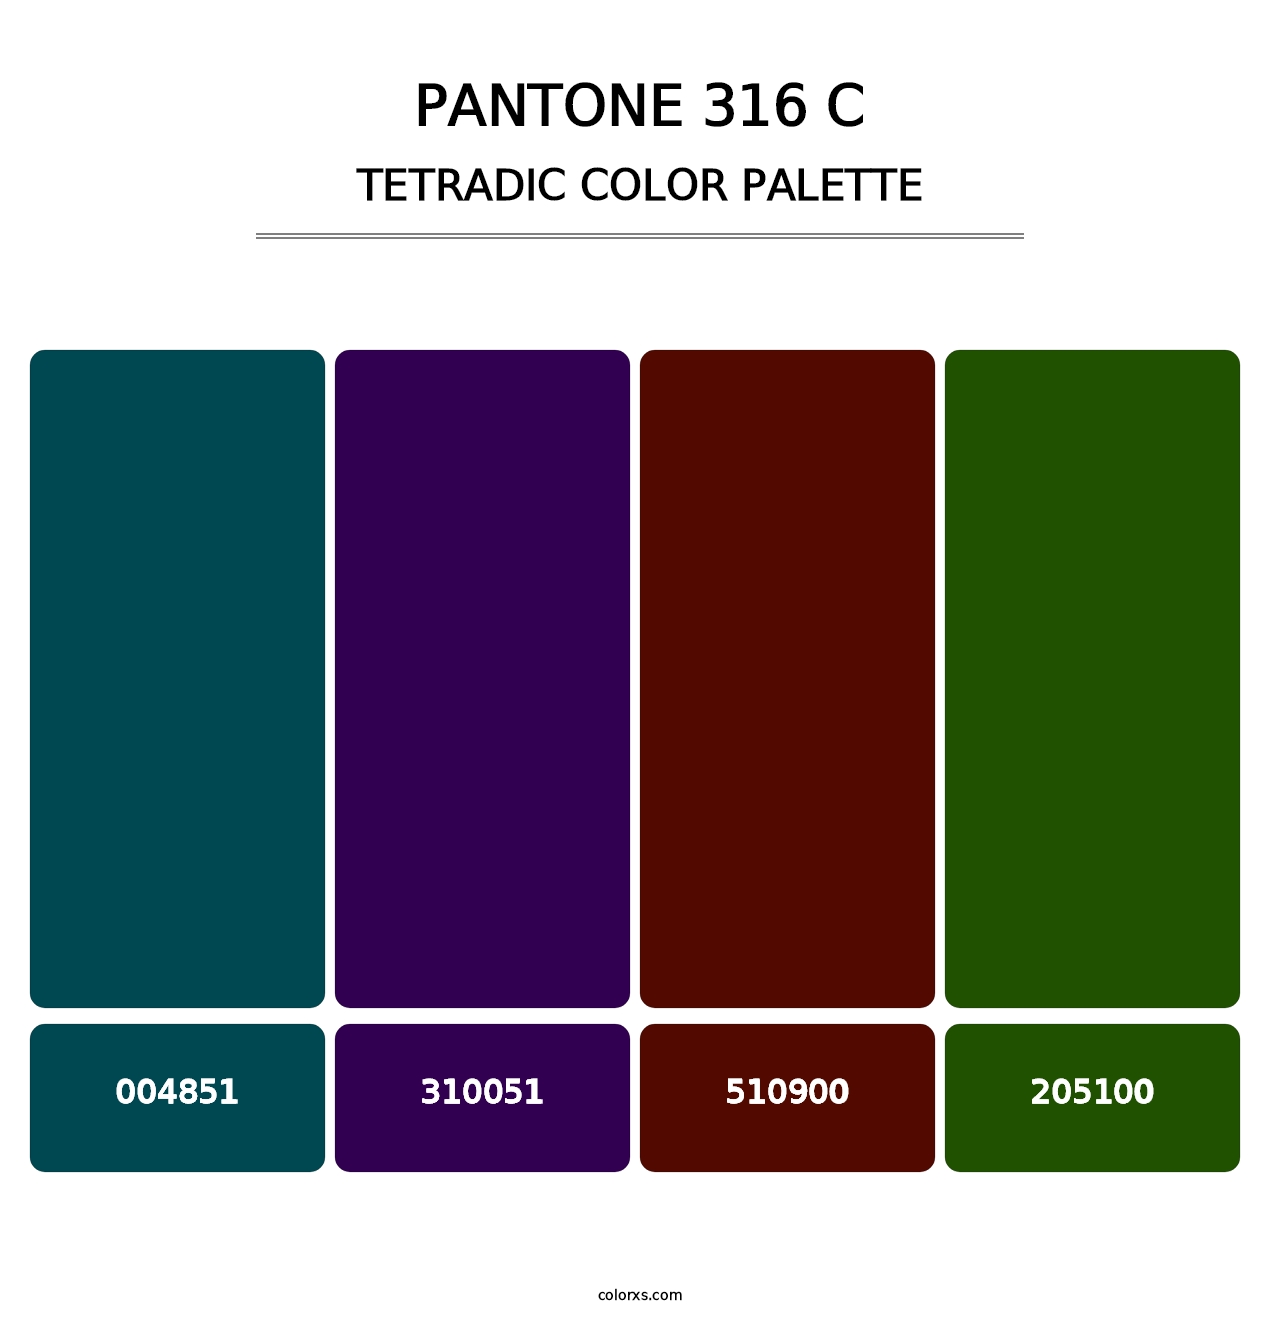 PANTONE 316 C - Tetradic Color Palette